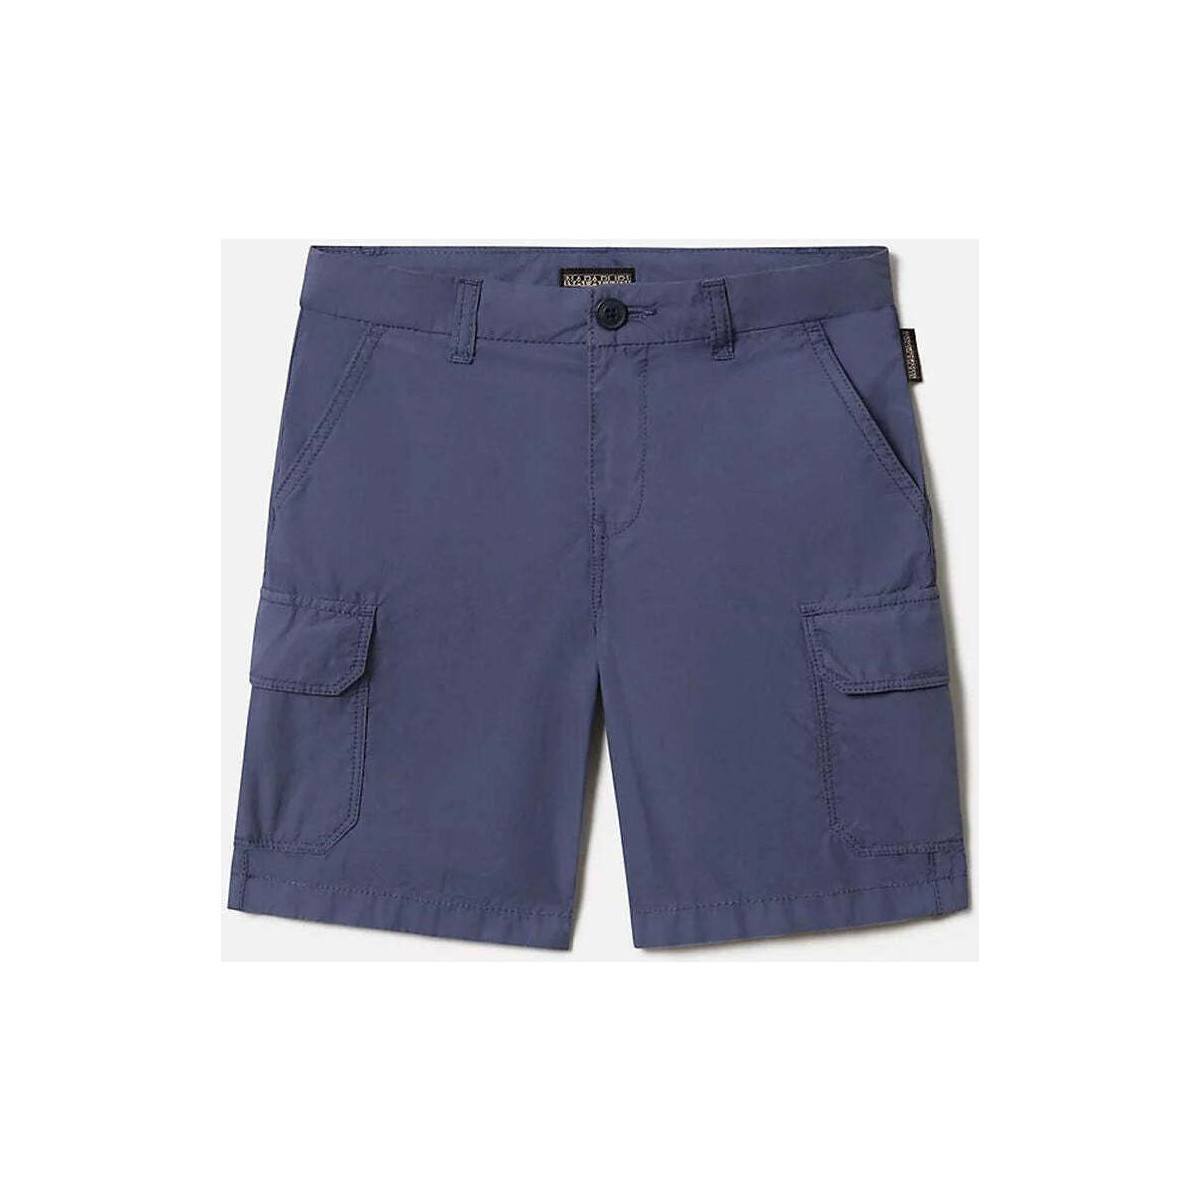 Vêtements Garçon Shorts / Bermudas Napapijri  Bleu